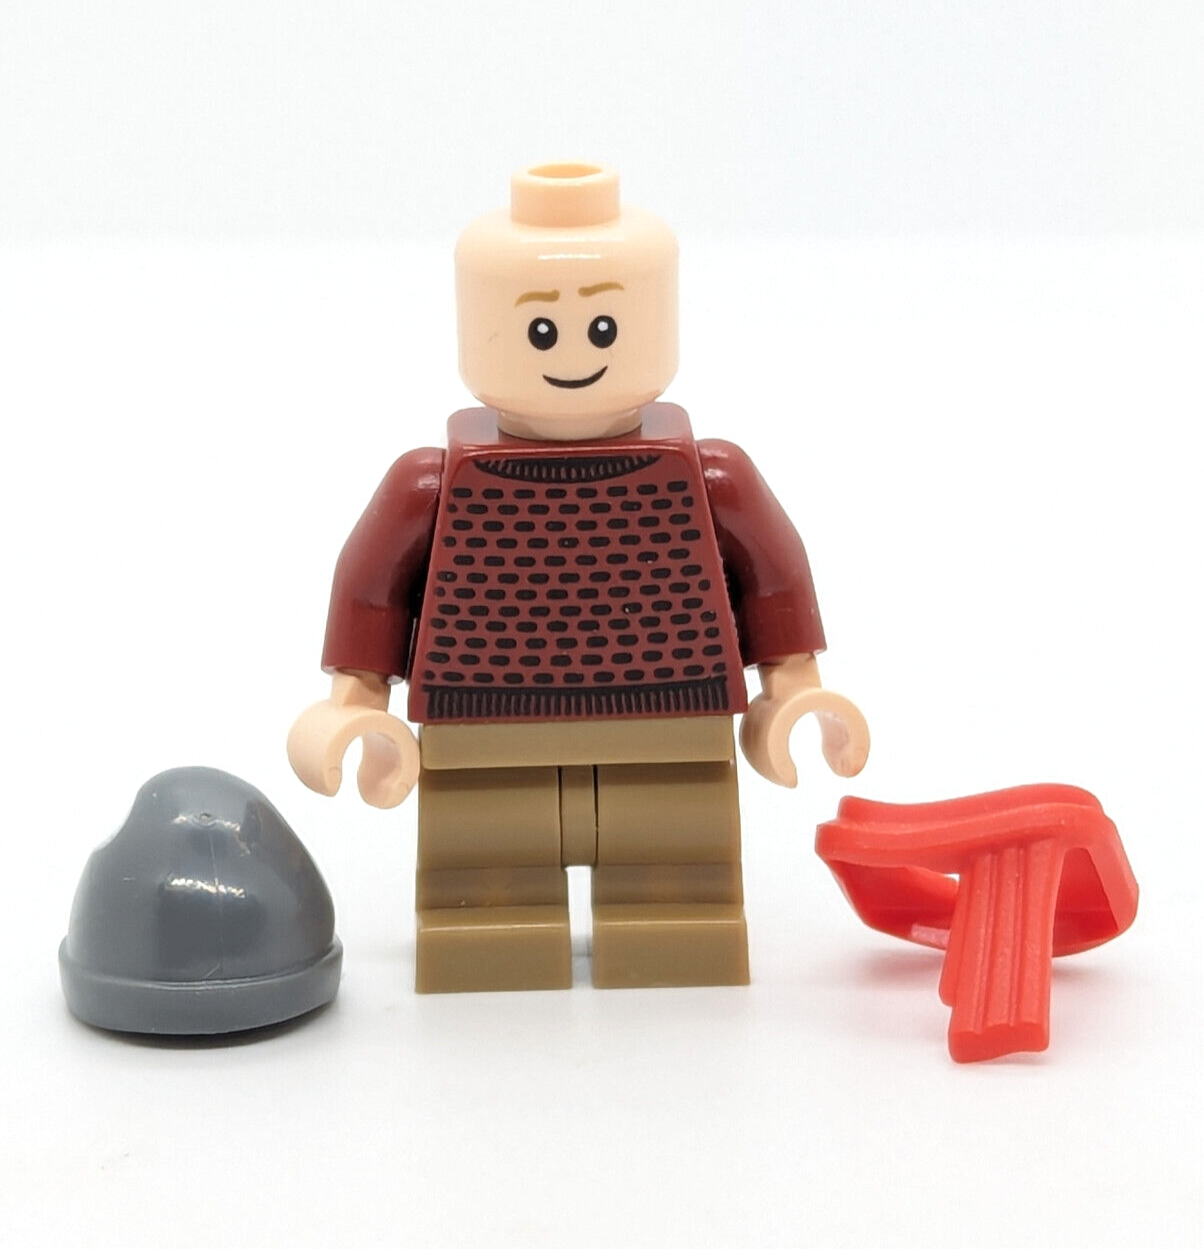 NEW Lego Ideas Minifigure - Home Alone - Kevin McCallister (idea099) 21330 (brr